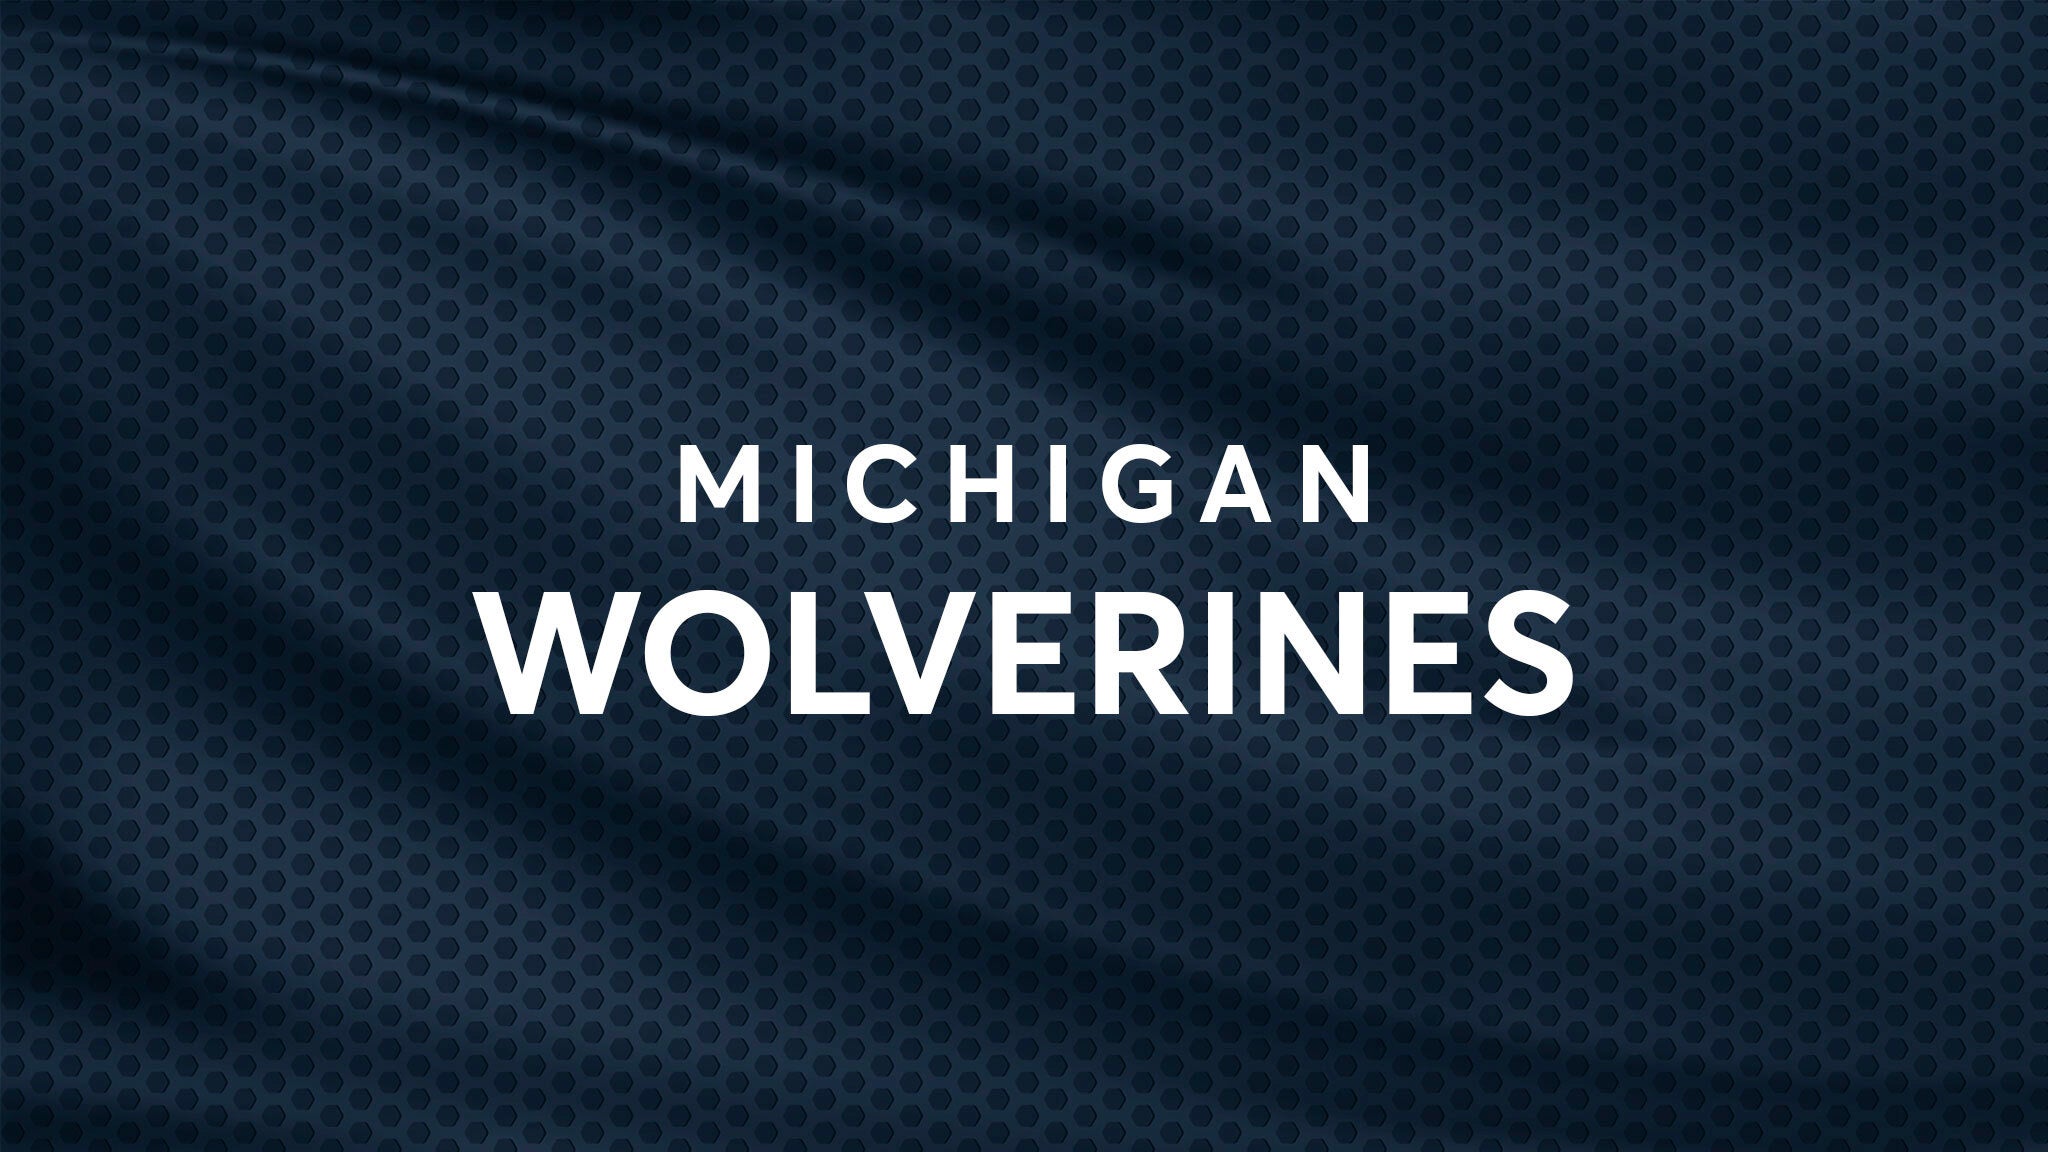 Michigan Wolverines Football vs. Michigan State Spartans Football hero